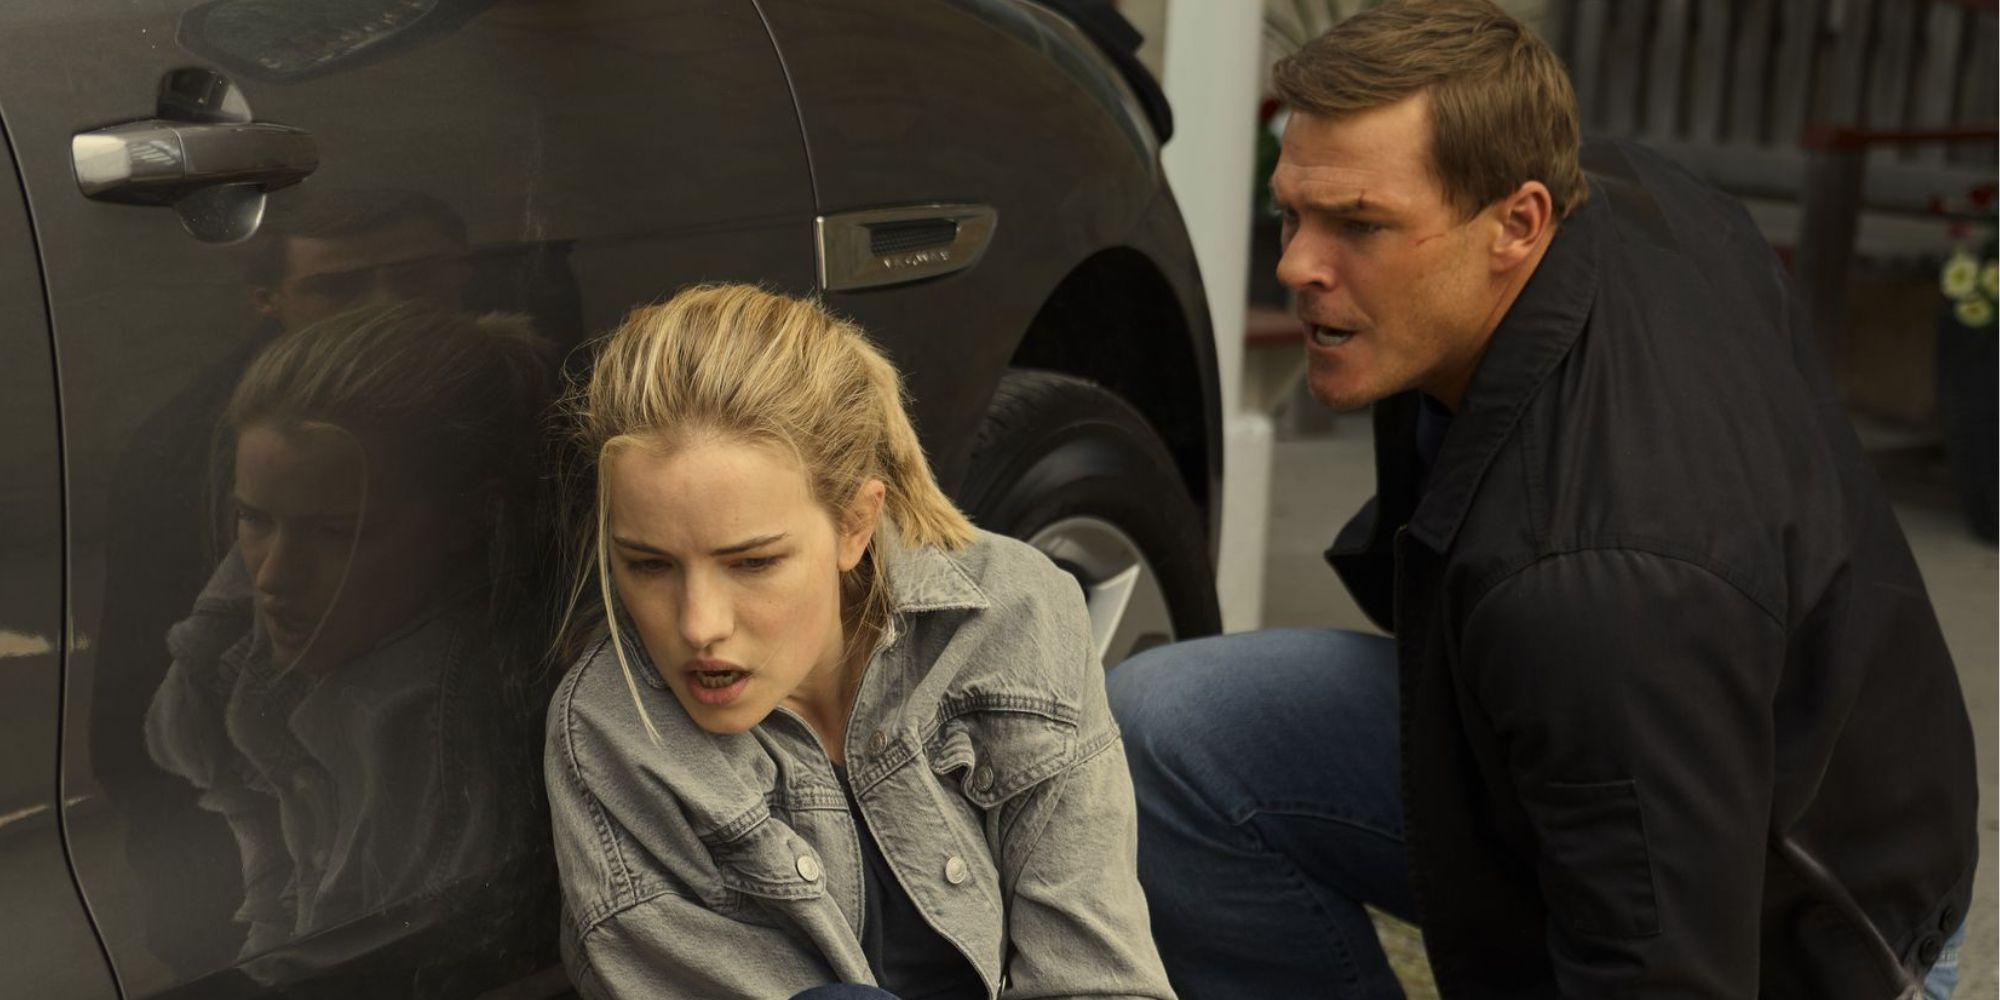 Willa Fitzgerald as Roscoe Conklin hiding behind a car with Alan Ritchson's Reacher.